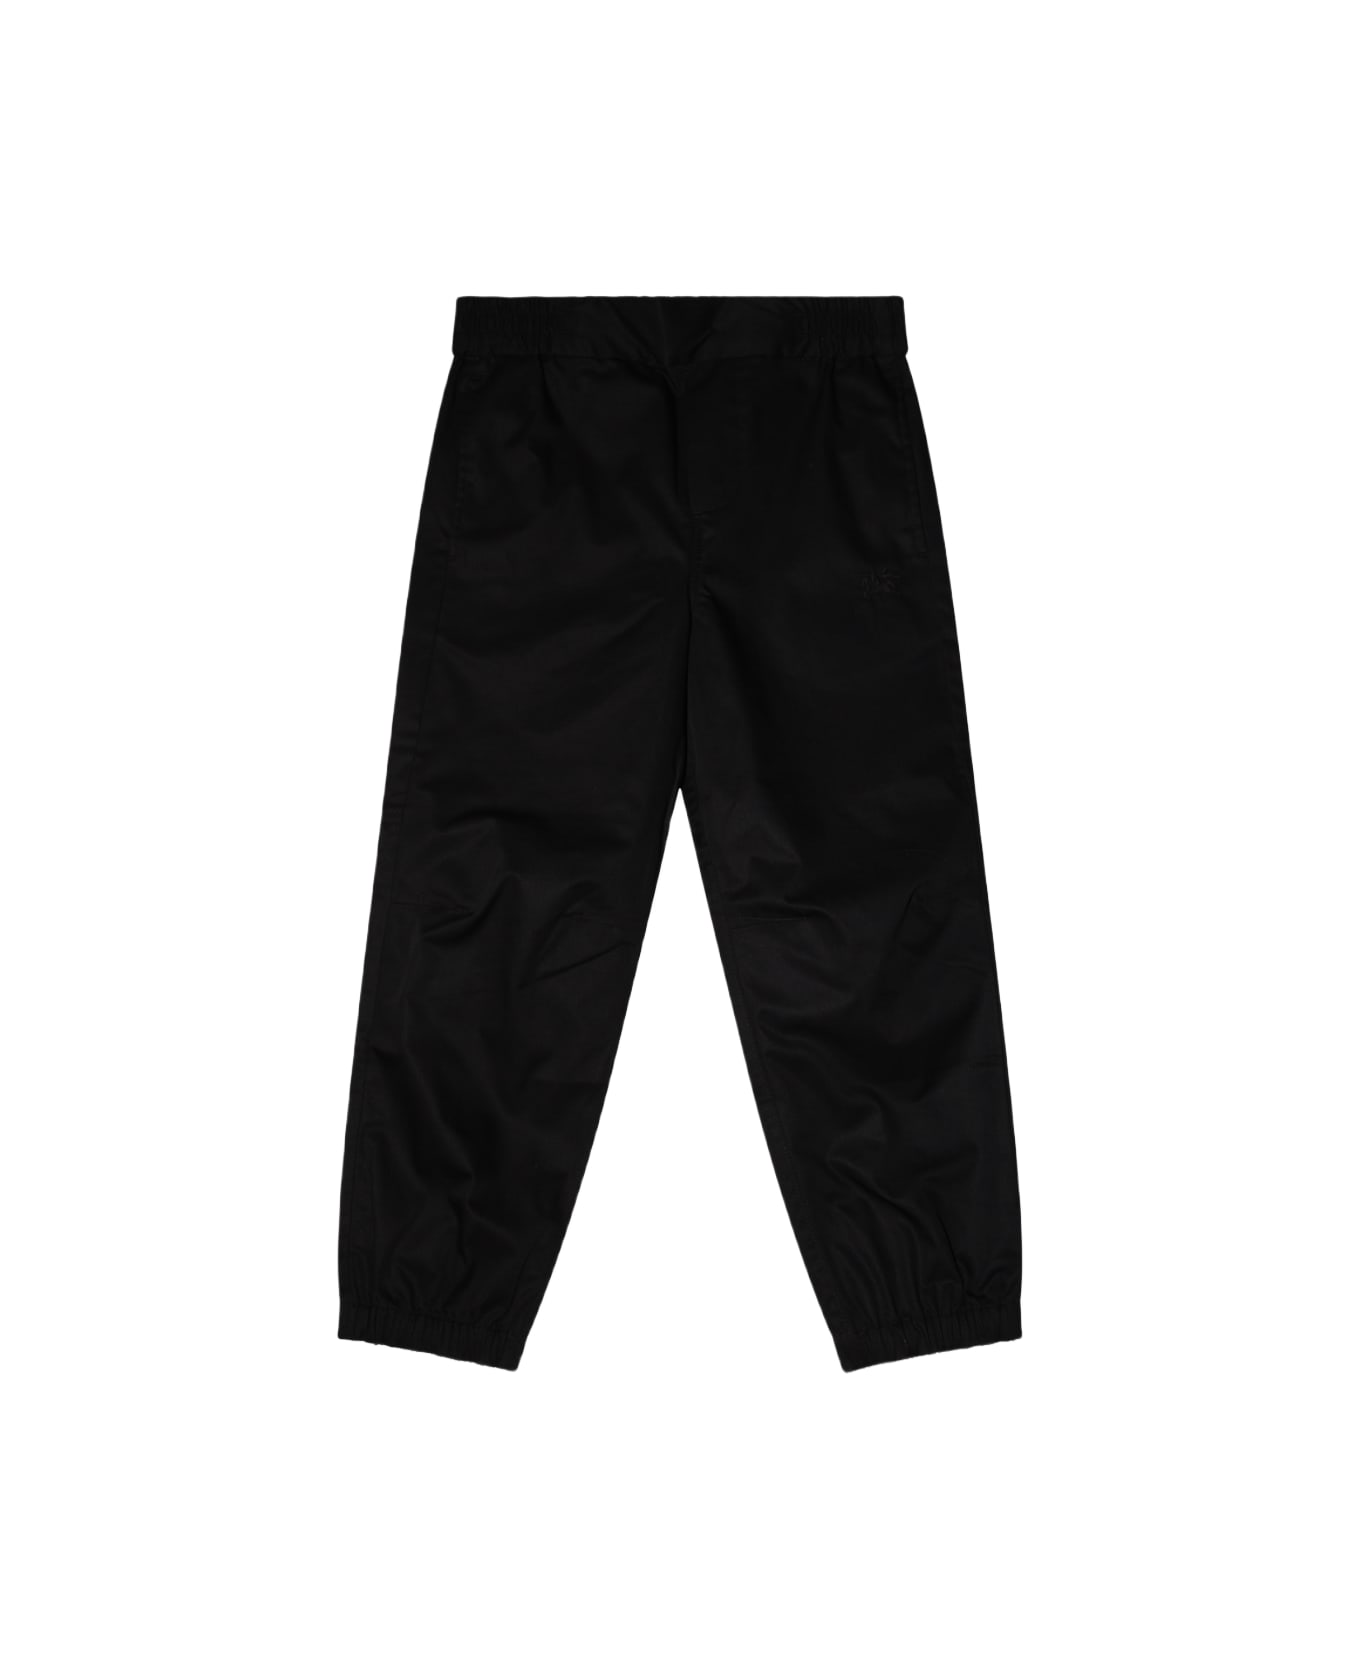 Burberry Black Cotton Pants - Black ボトムス